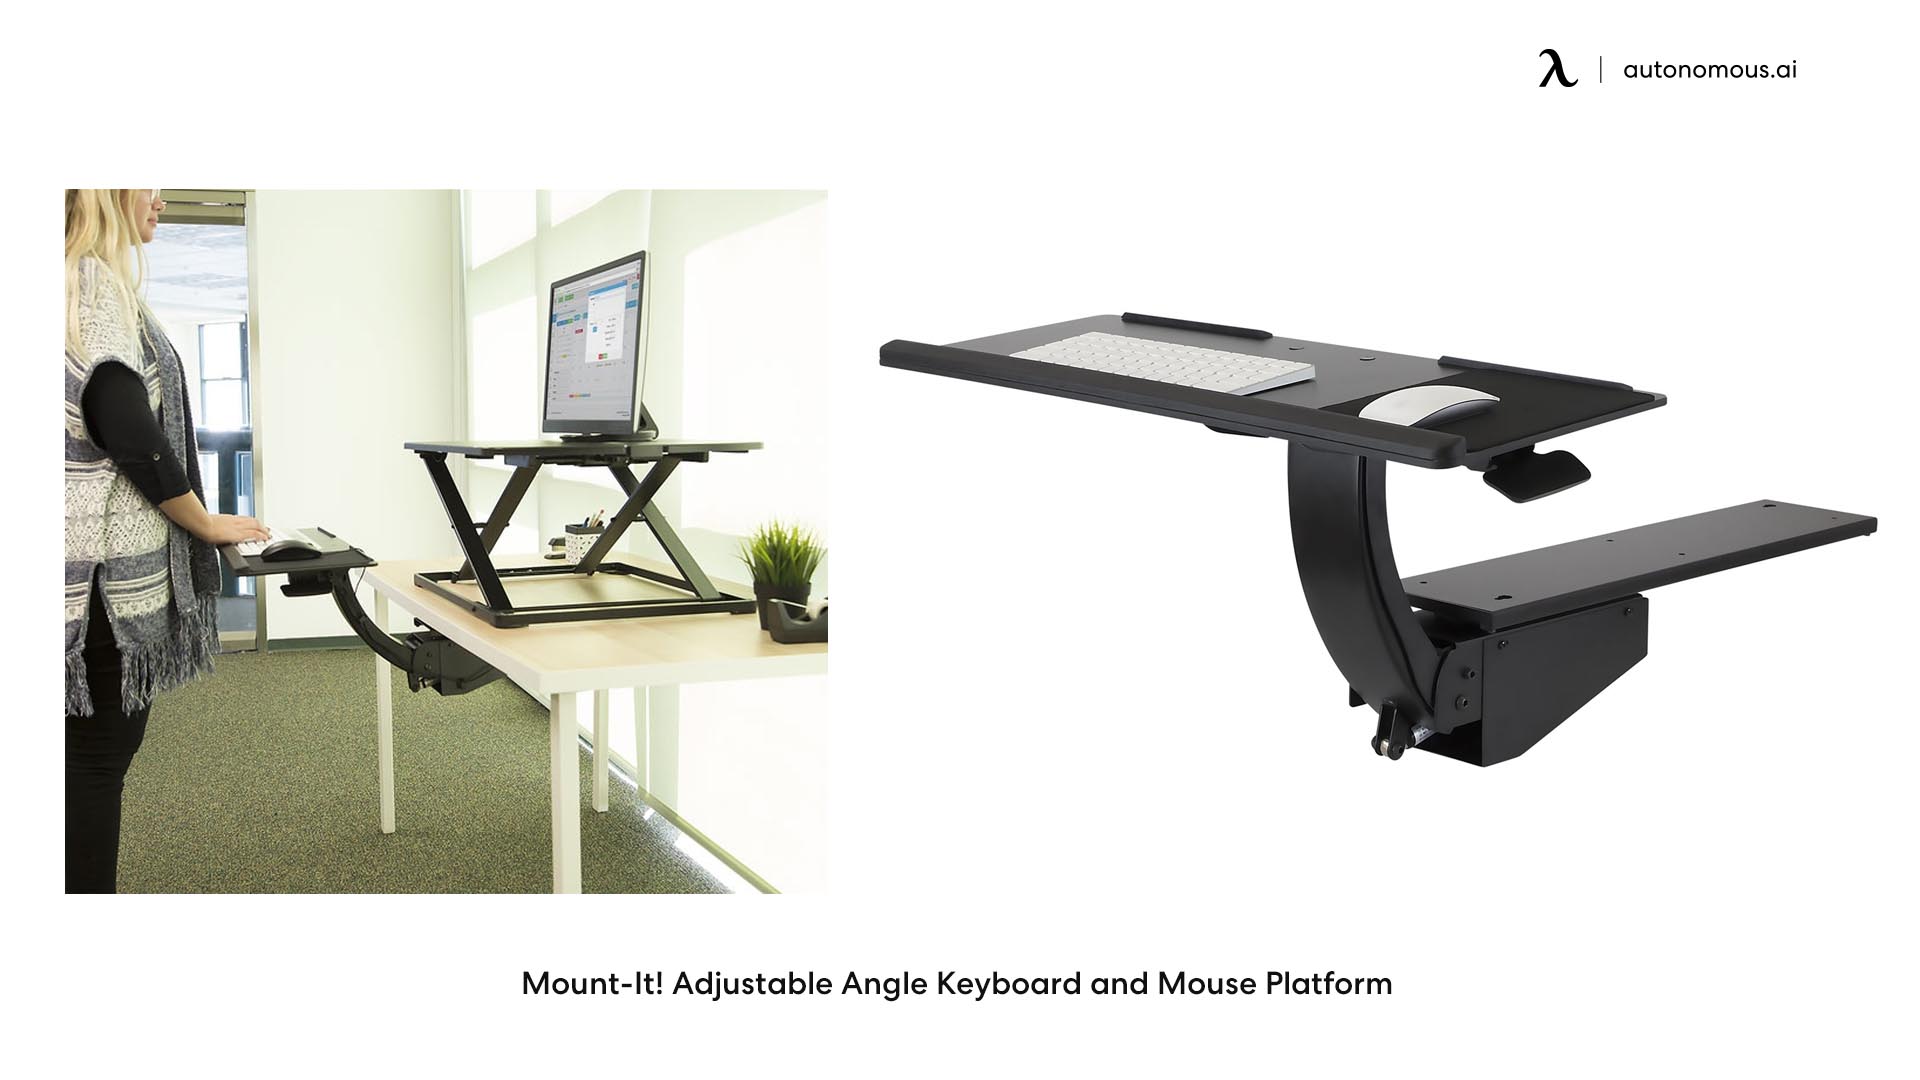 Mount-It! Adjustable Angle Keyboard and Mouse Platform